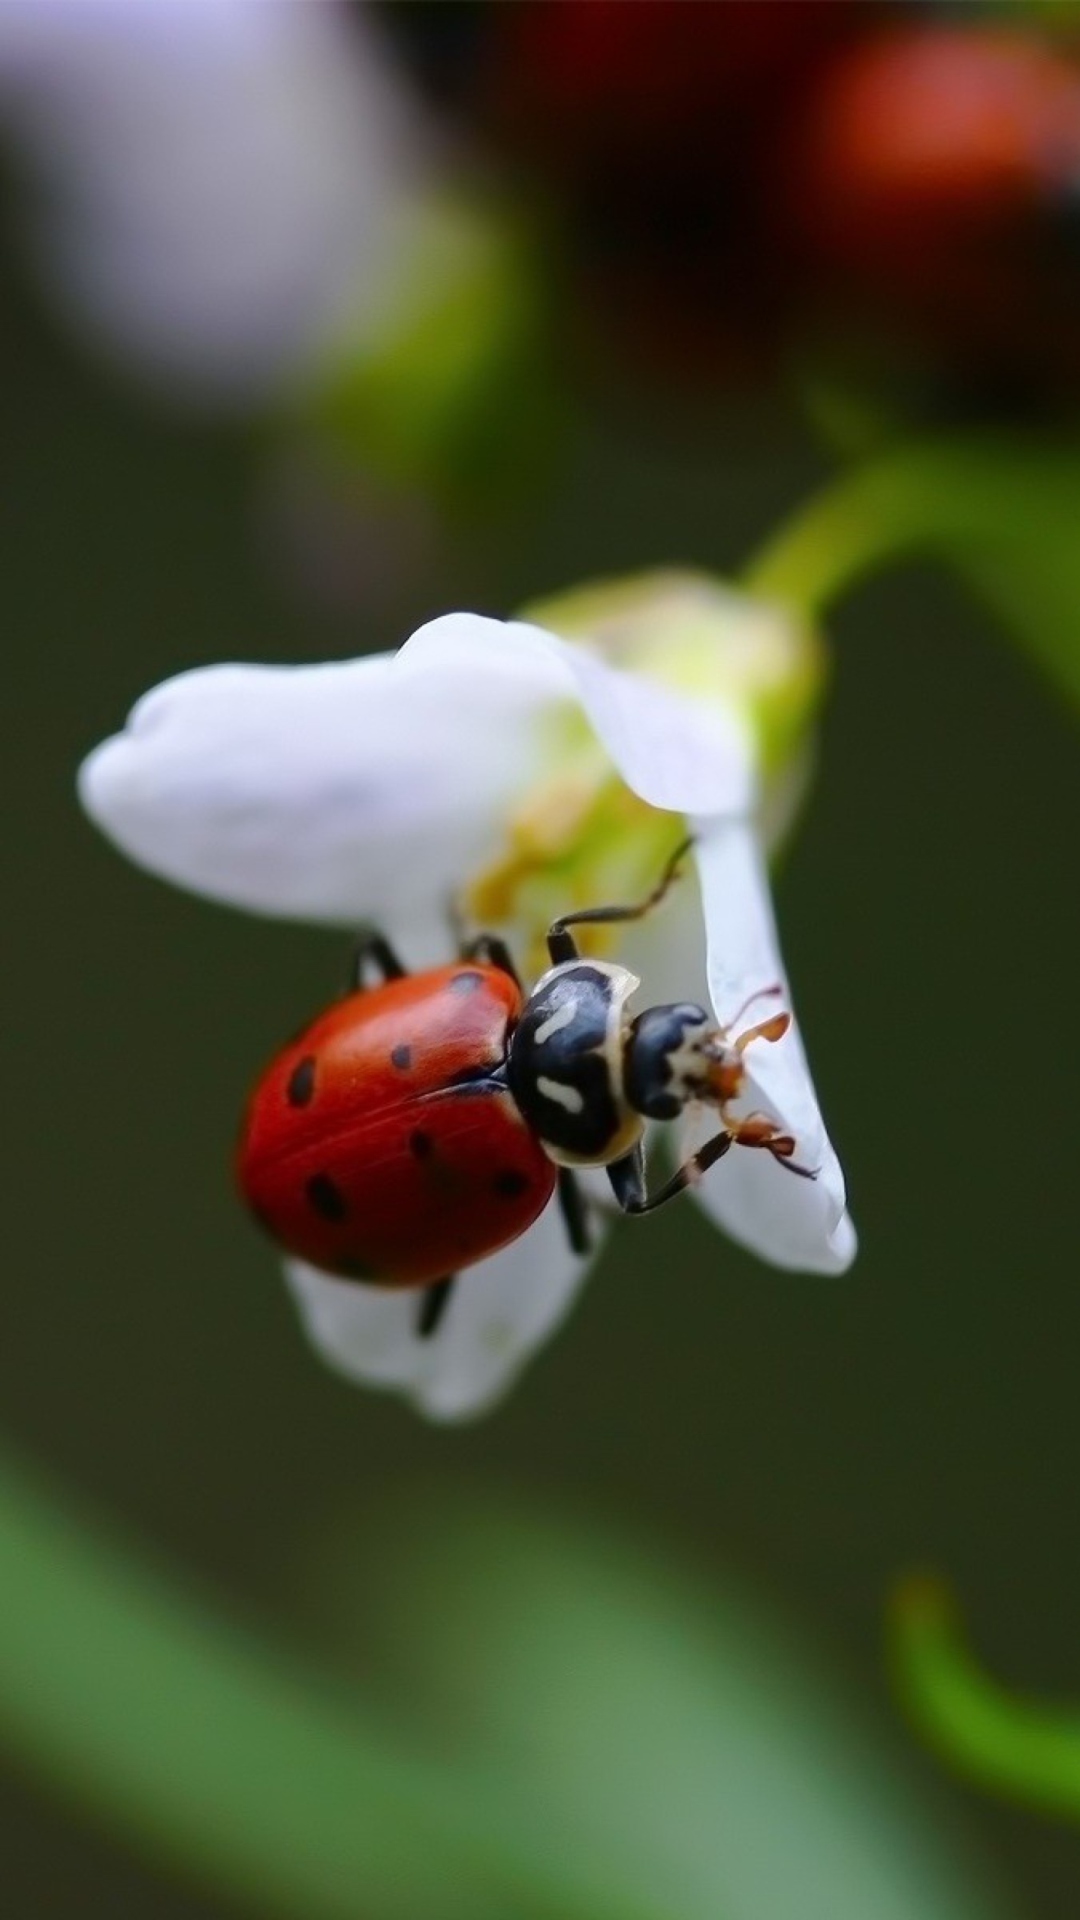 Ladybug On Flower wallpaper 1080x1920